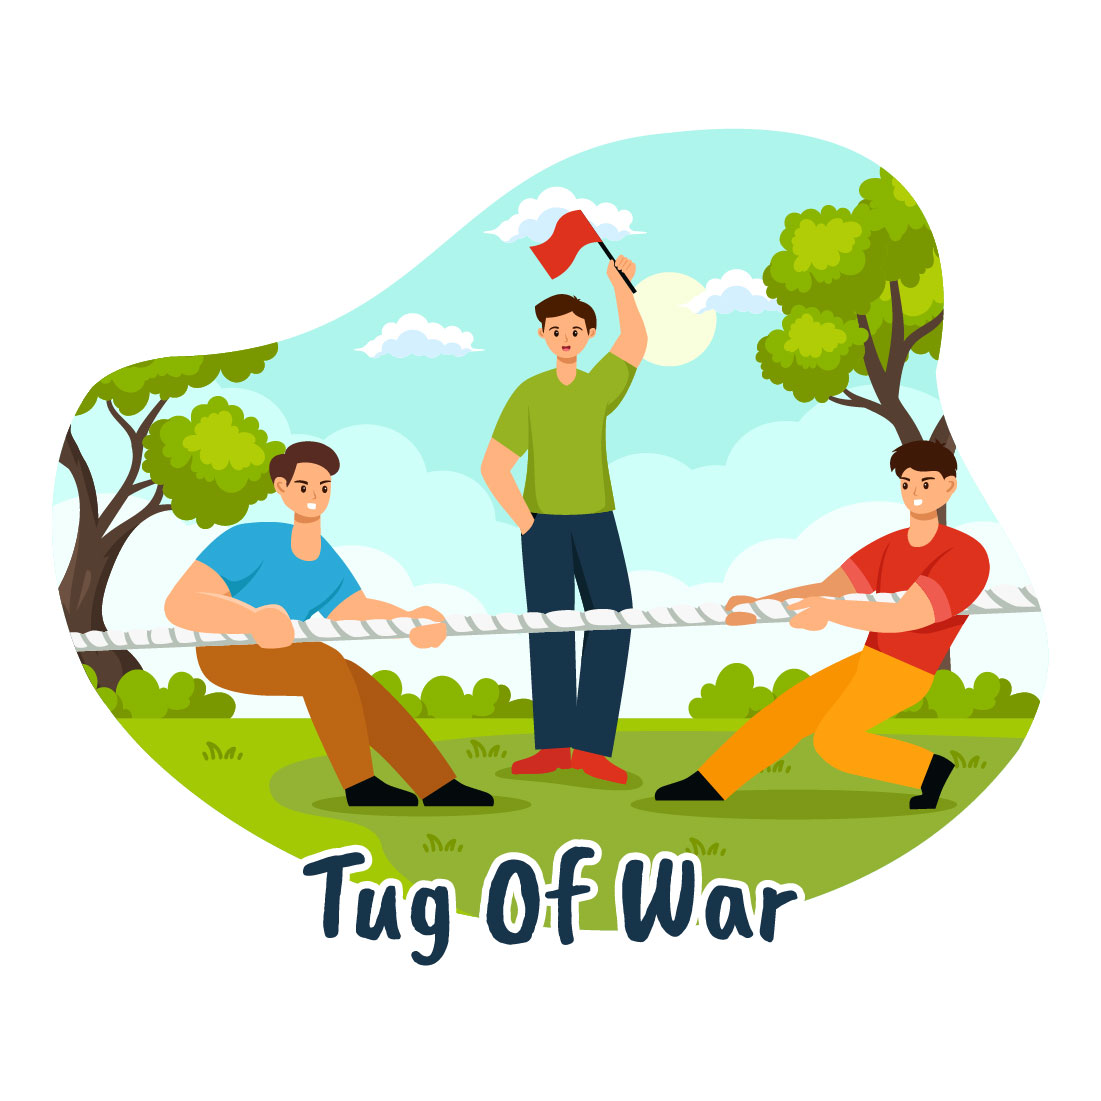 9 Tug of war Vector Illustration cover image.